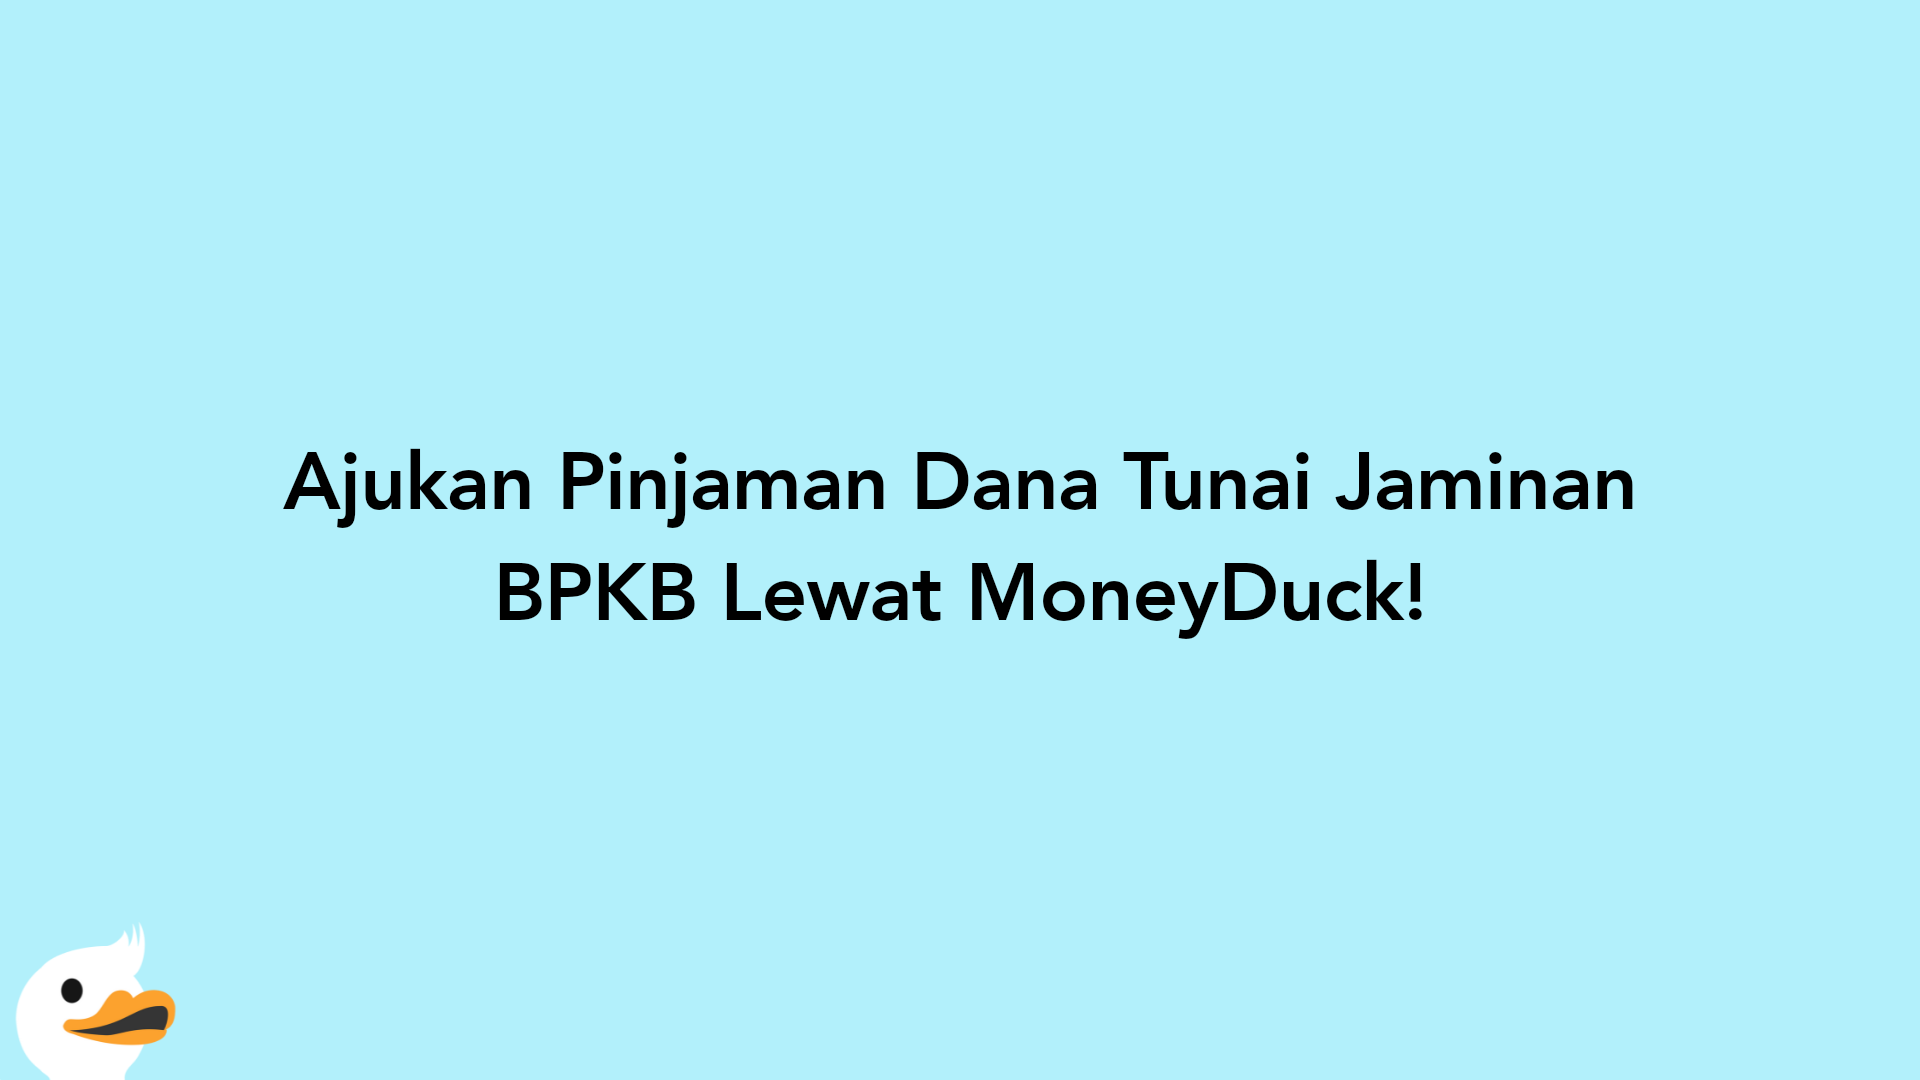 Ajukan Pinjaman Dana Tunai Jaminan BPKB Lewat MoneyDuck!